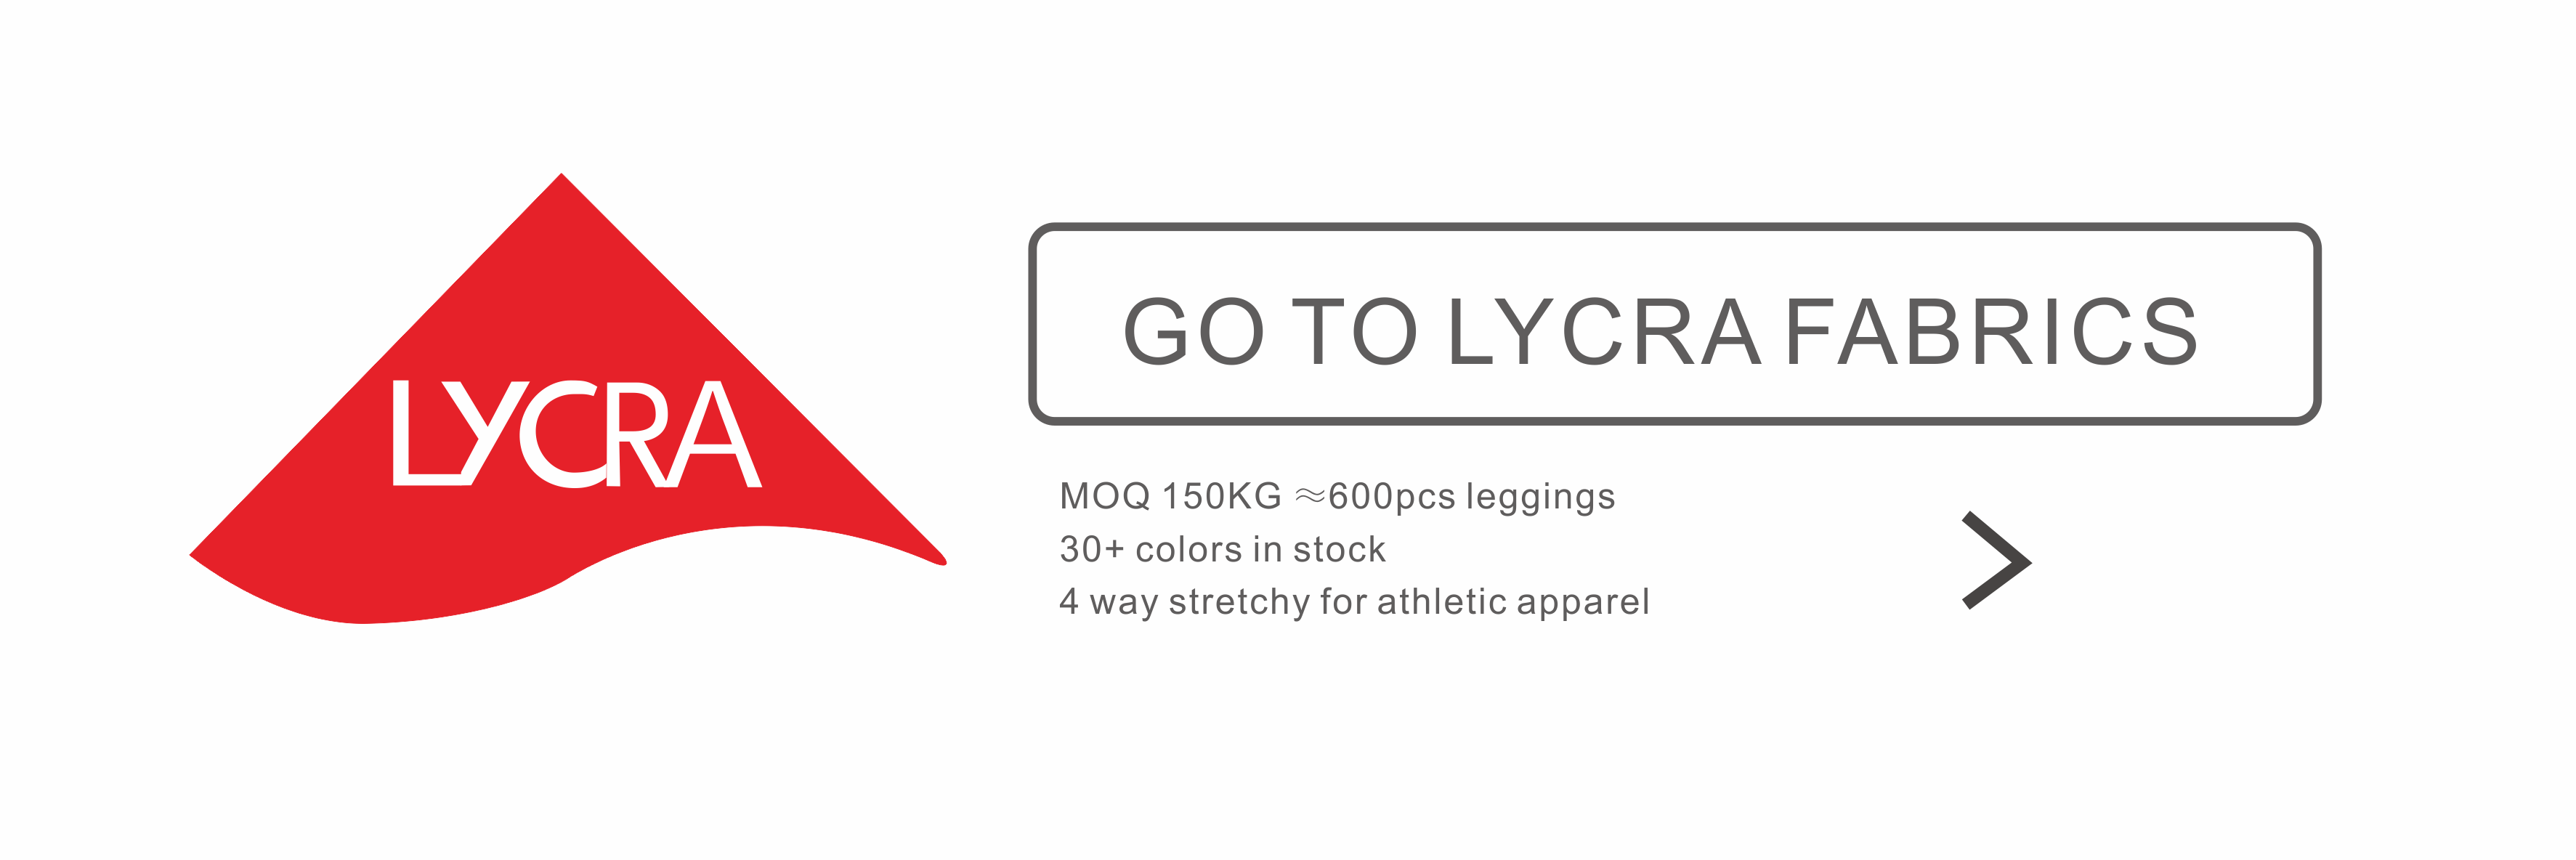 go to lycra fabrics